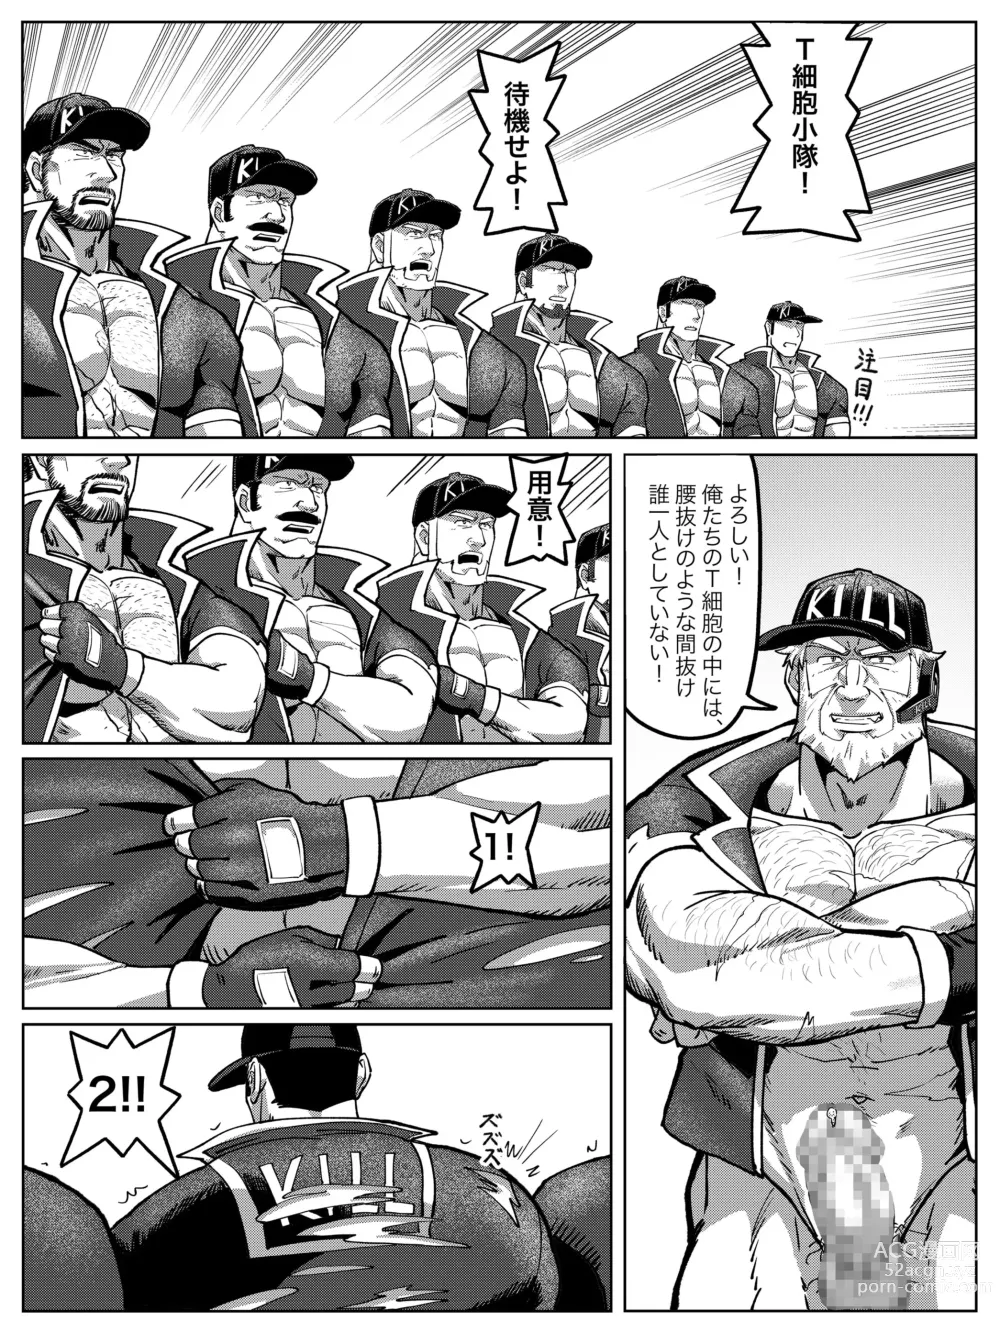 Page 15 of doujinshi BEHEAD